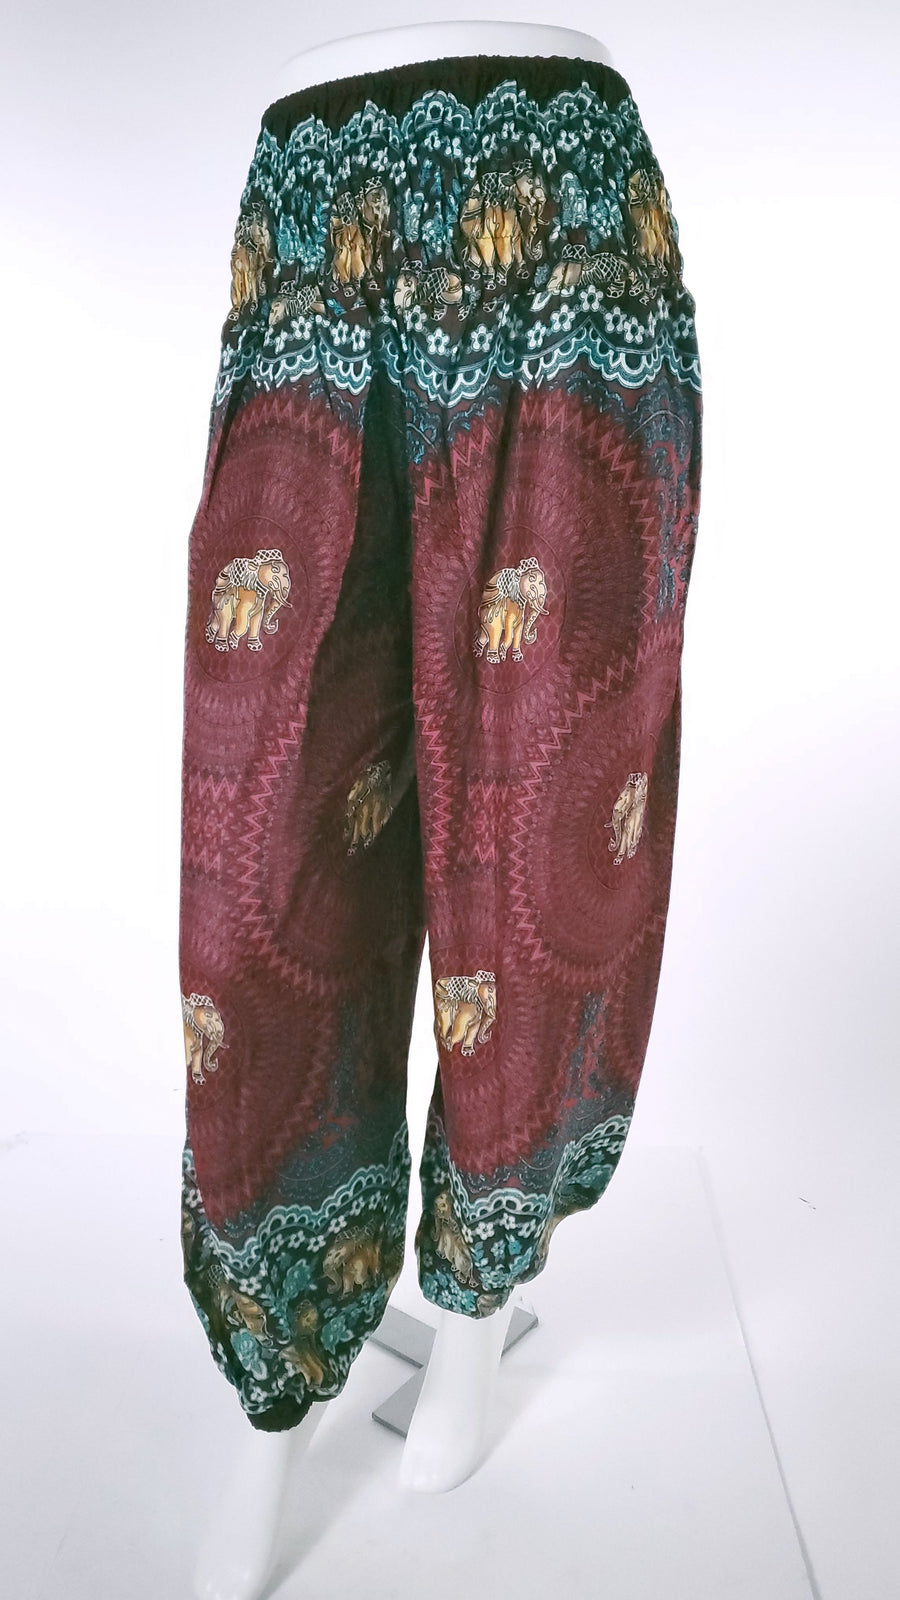 Elephant Design Straight Leg Harem Pants in Red-The High Thai-The High Thai-Yoga Pants-Harem Pants-Hippie Clothing-San Diego